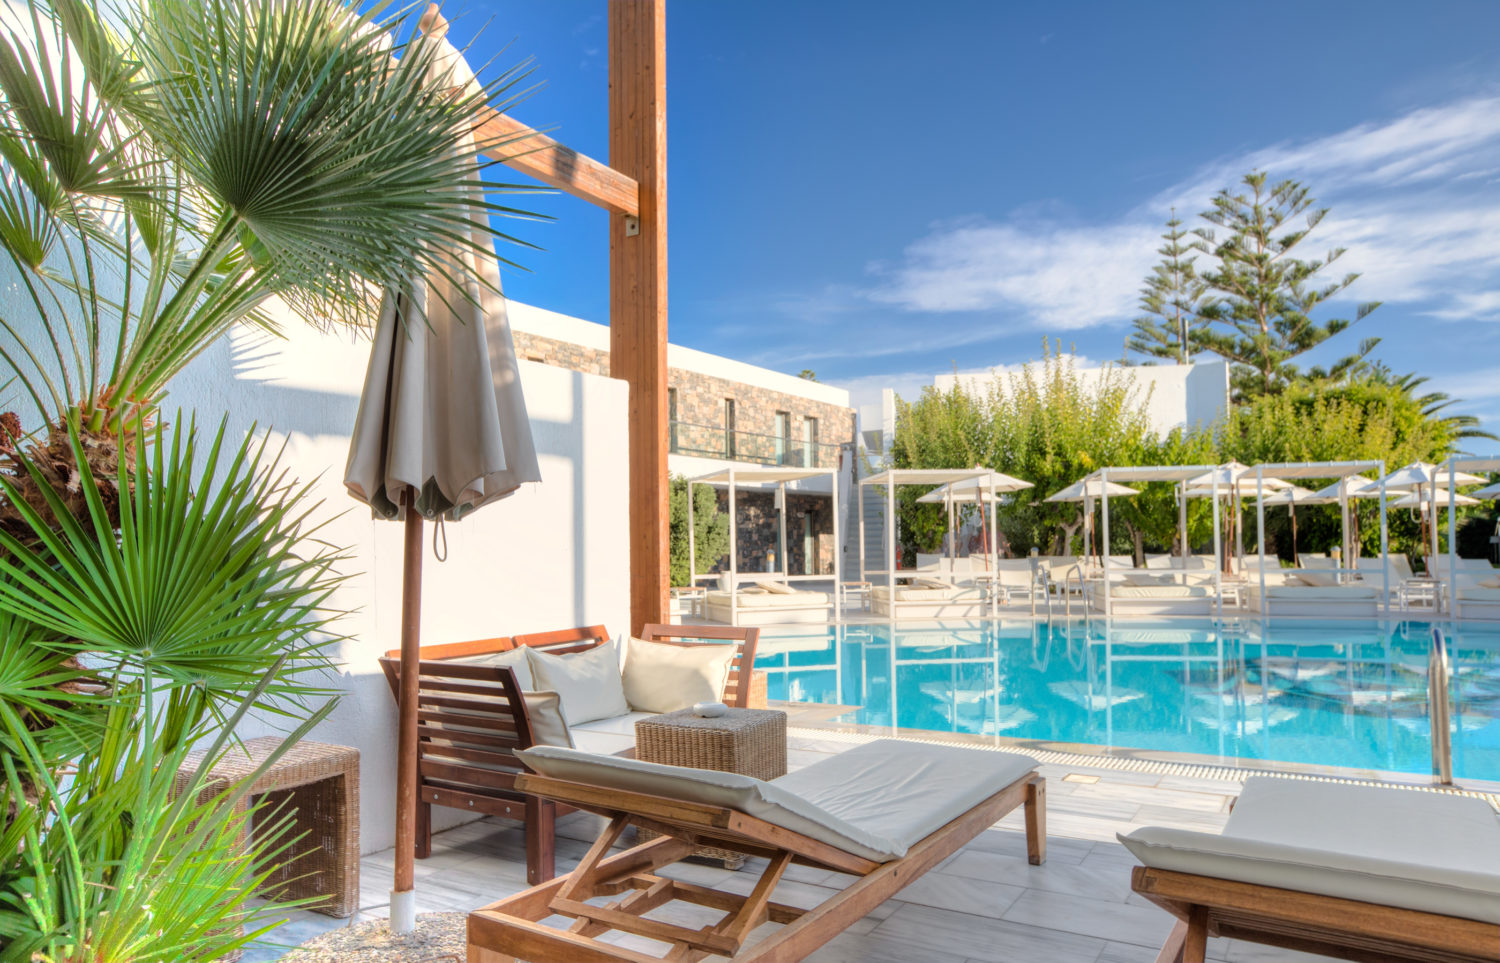 Island Hotel Heraklion Crete